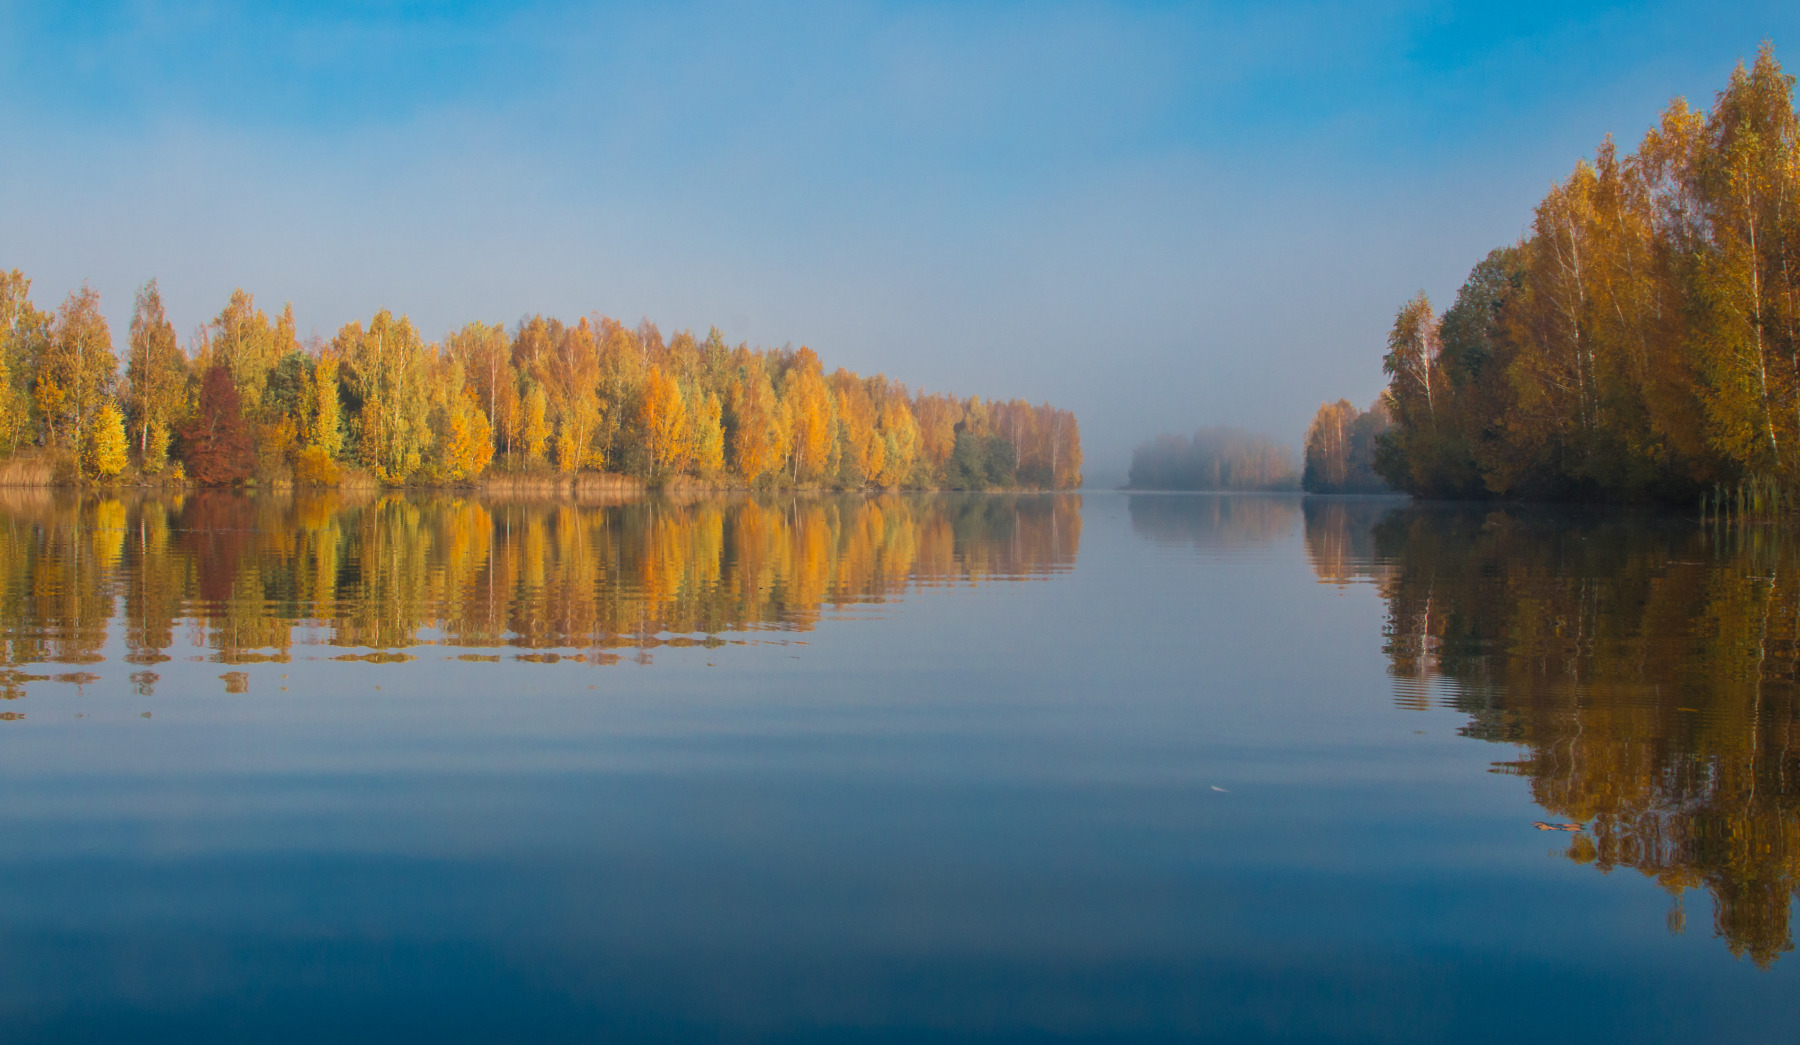 на озере  осенью | Фотограф Александр Есликов | foto.by фото.бай